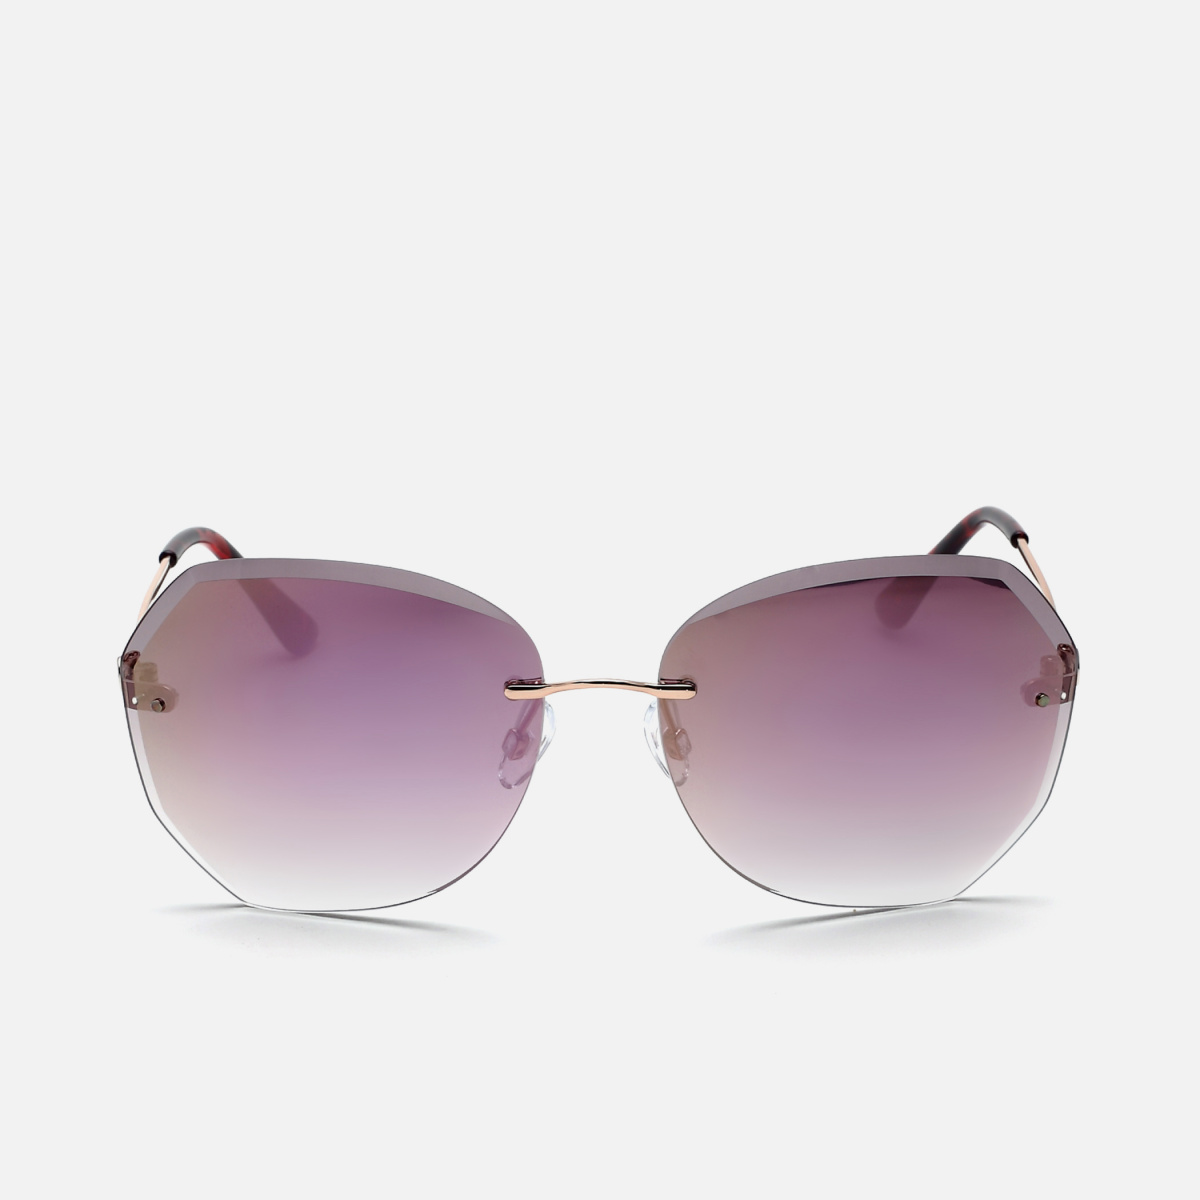 BEBE Women UV-Protected Geometric Sunglasses - BEBE3044C4S